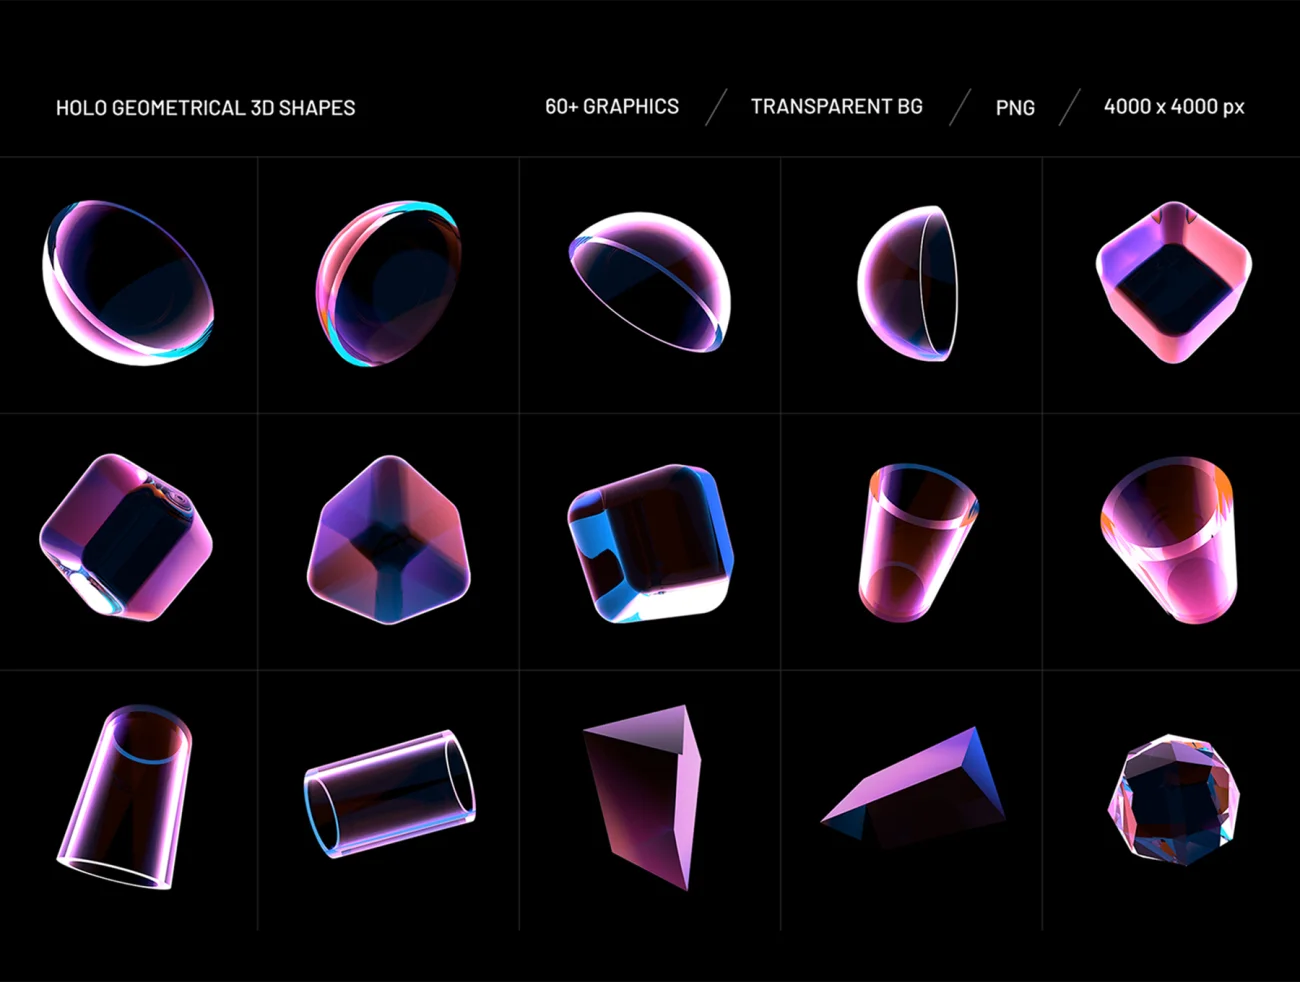 60款全息几何3D形状模型素材 Holo Geometrical 3D Shapes Collection .sketch .psd .ai .ae .id .ppt .xd .figma .an插图1